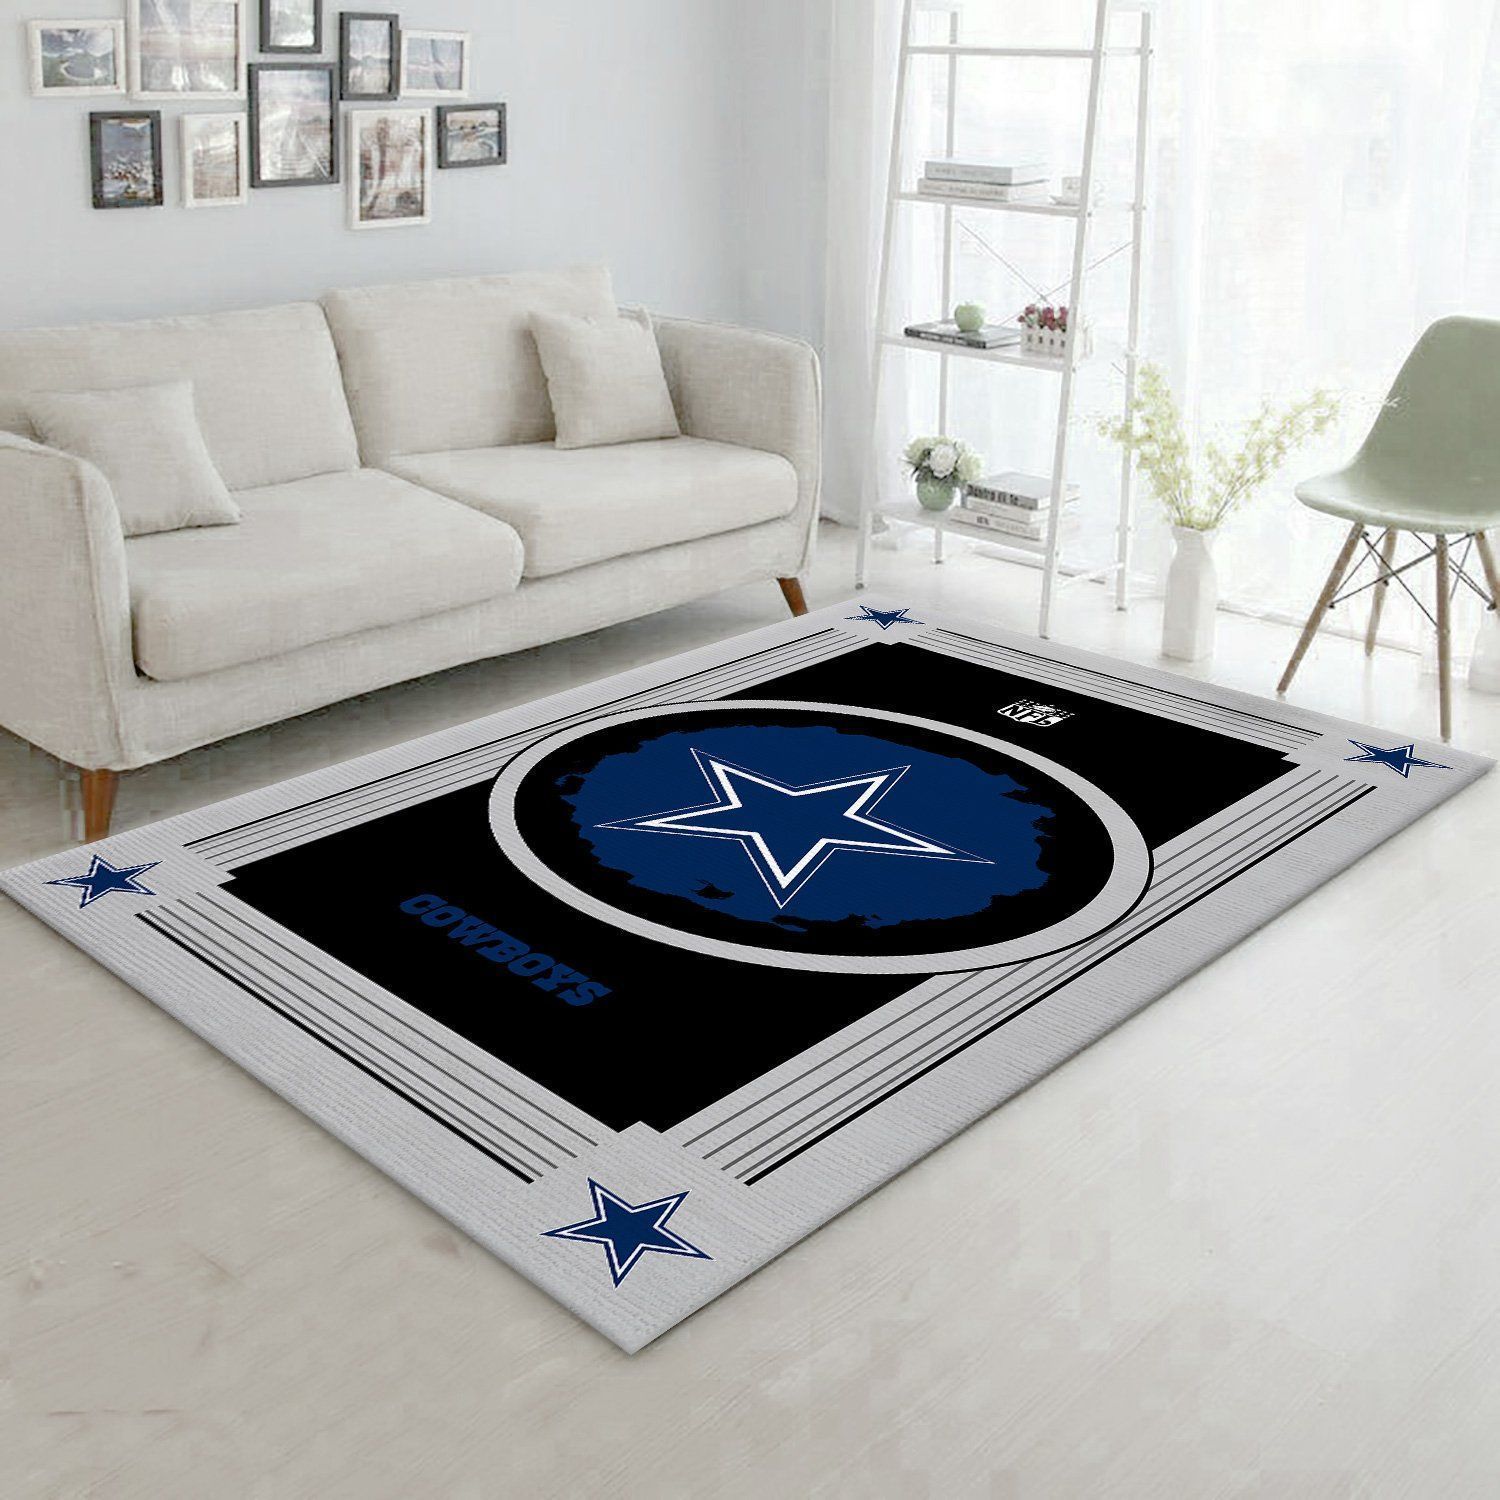 Dallas Cowboys NFL Logo Style Area Rugs Living Room Carpet Floor Decor The US Decor - Indoor Outdoor Rugs 1